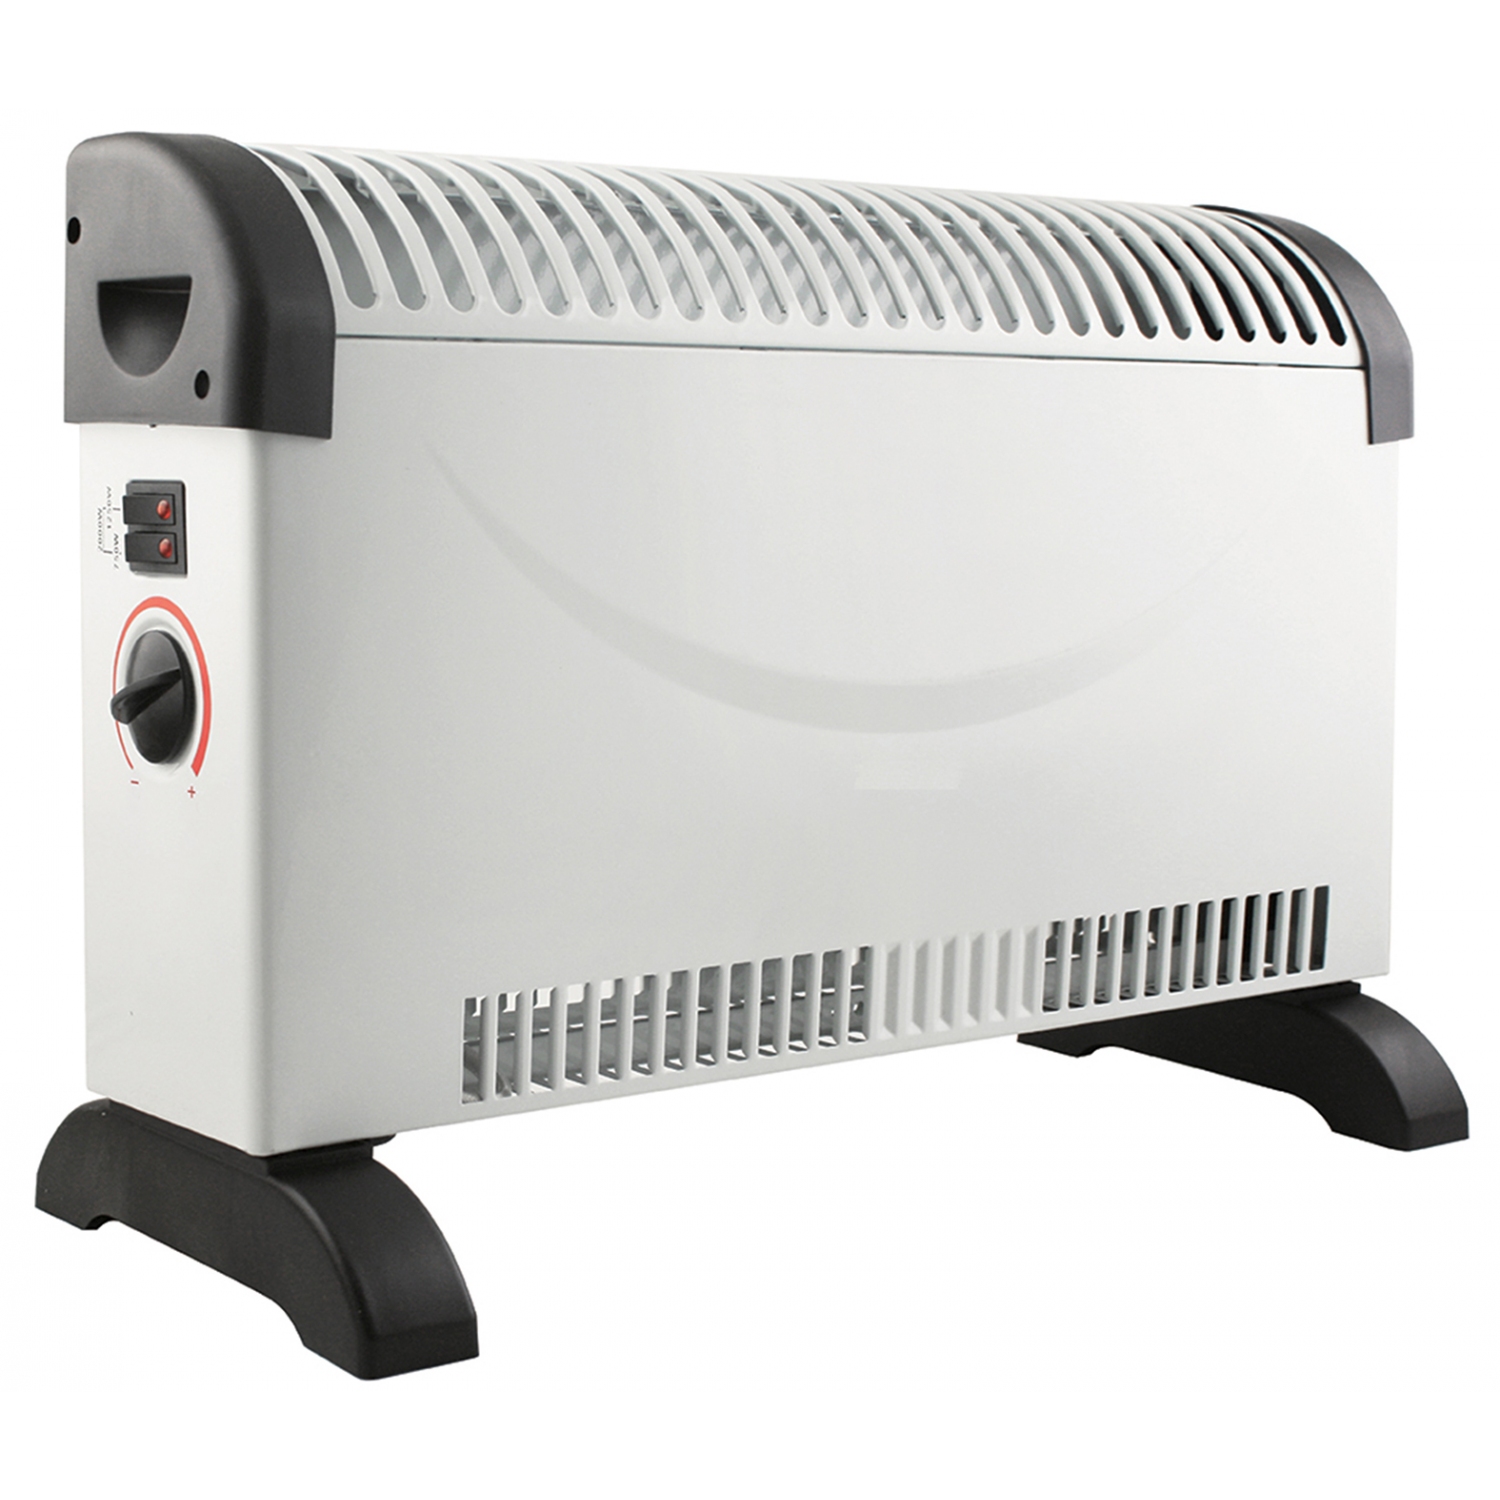 Igenix 2kw Convertor Heater (white) - 0